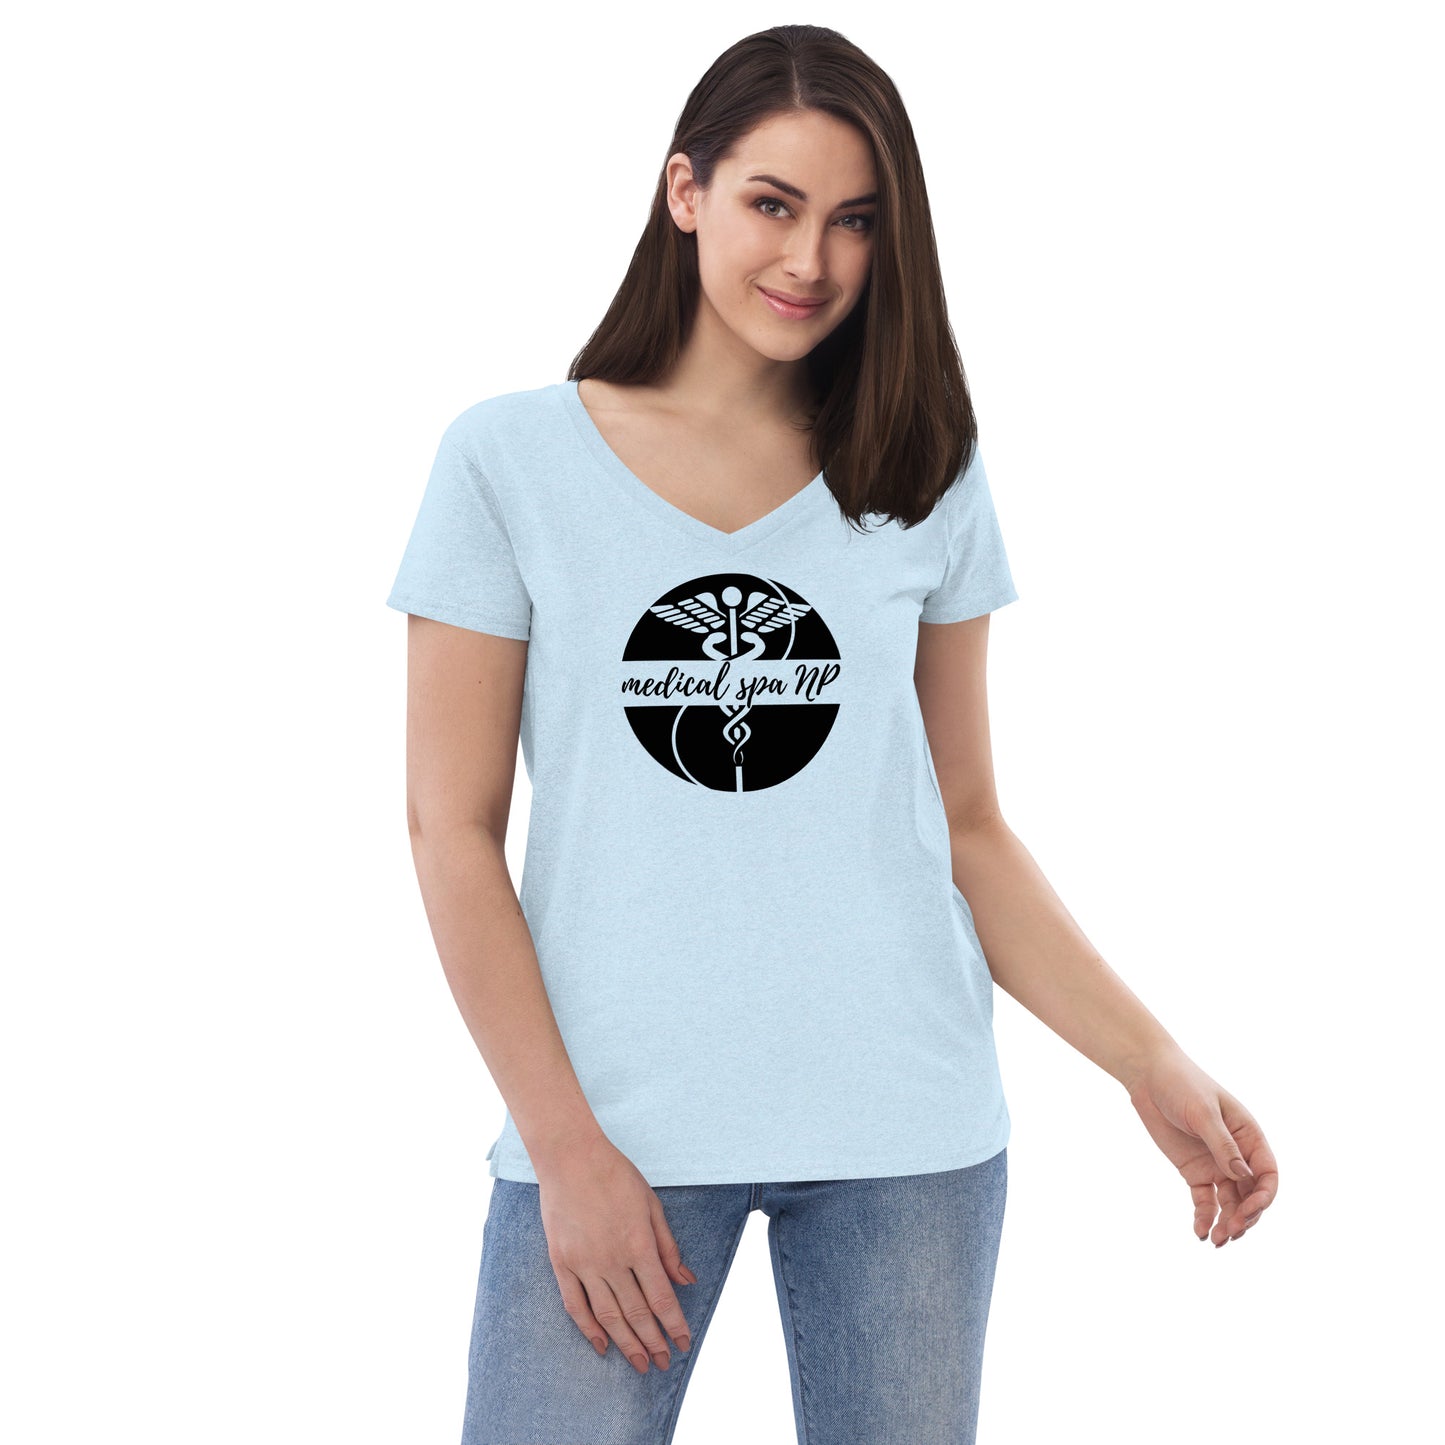 Women’s recycled v-neck t-shirt